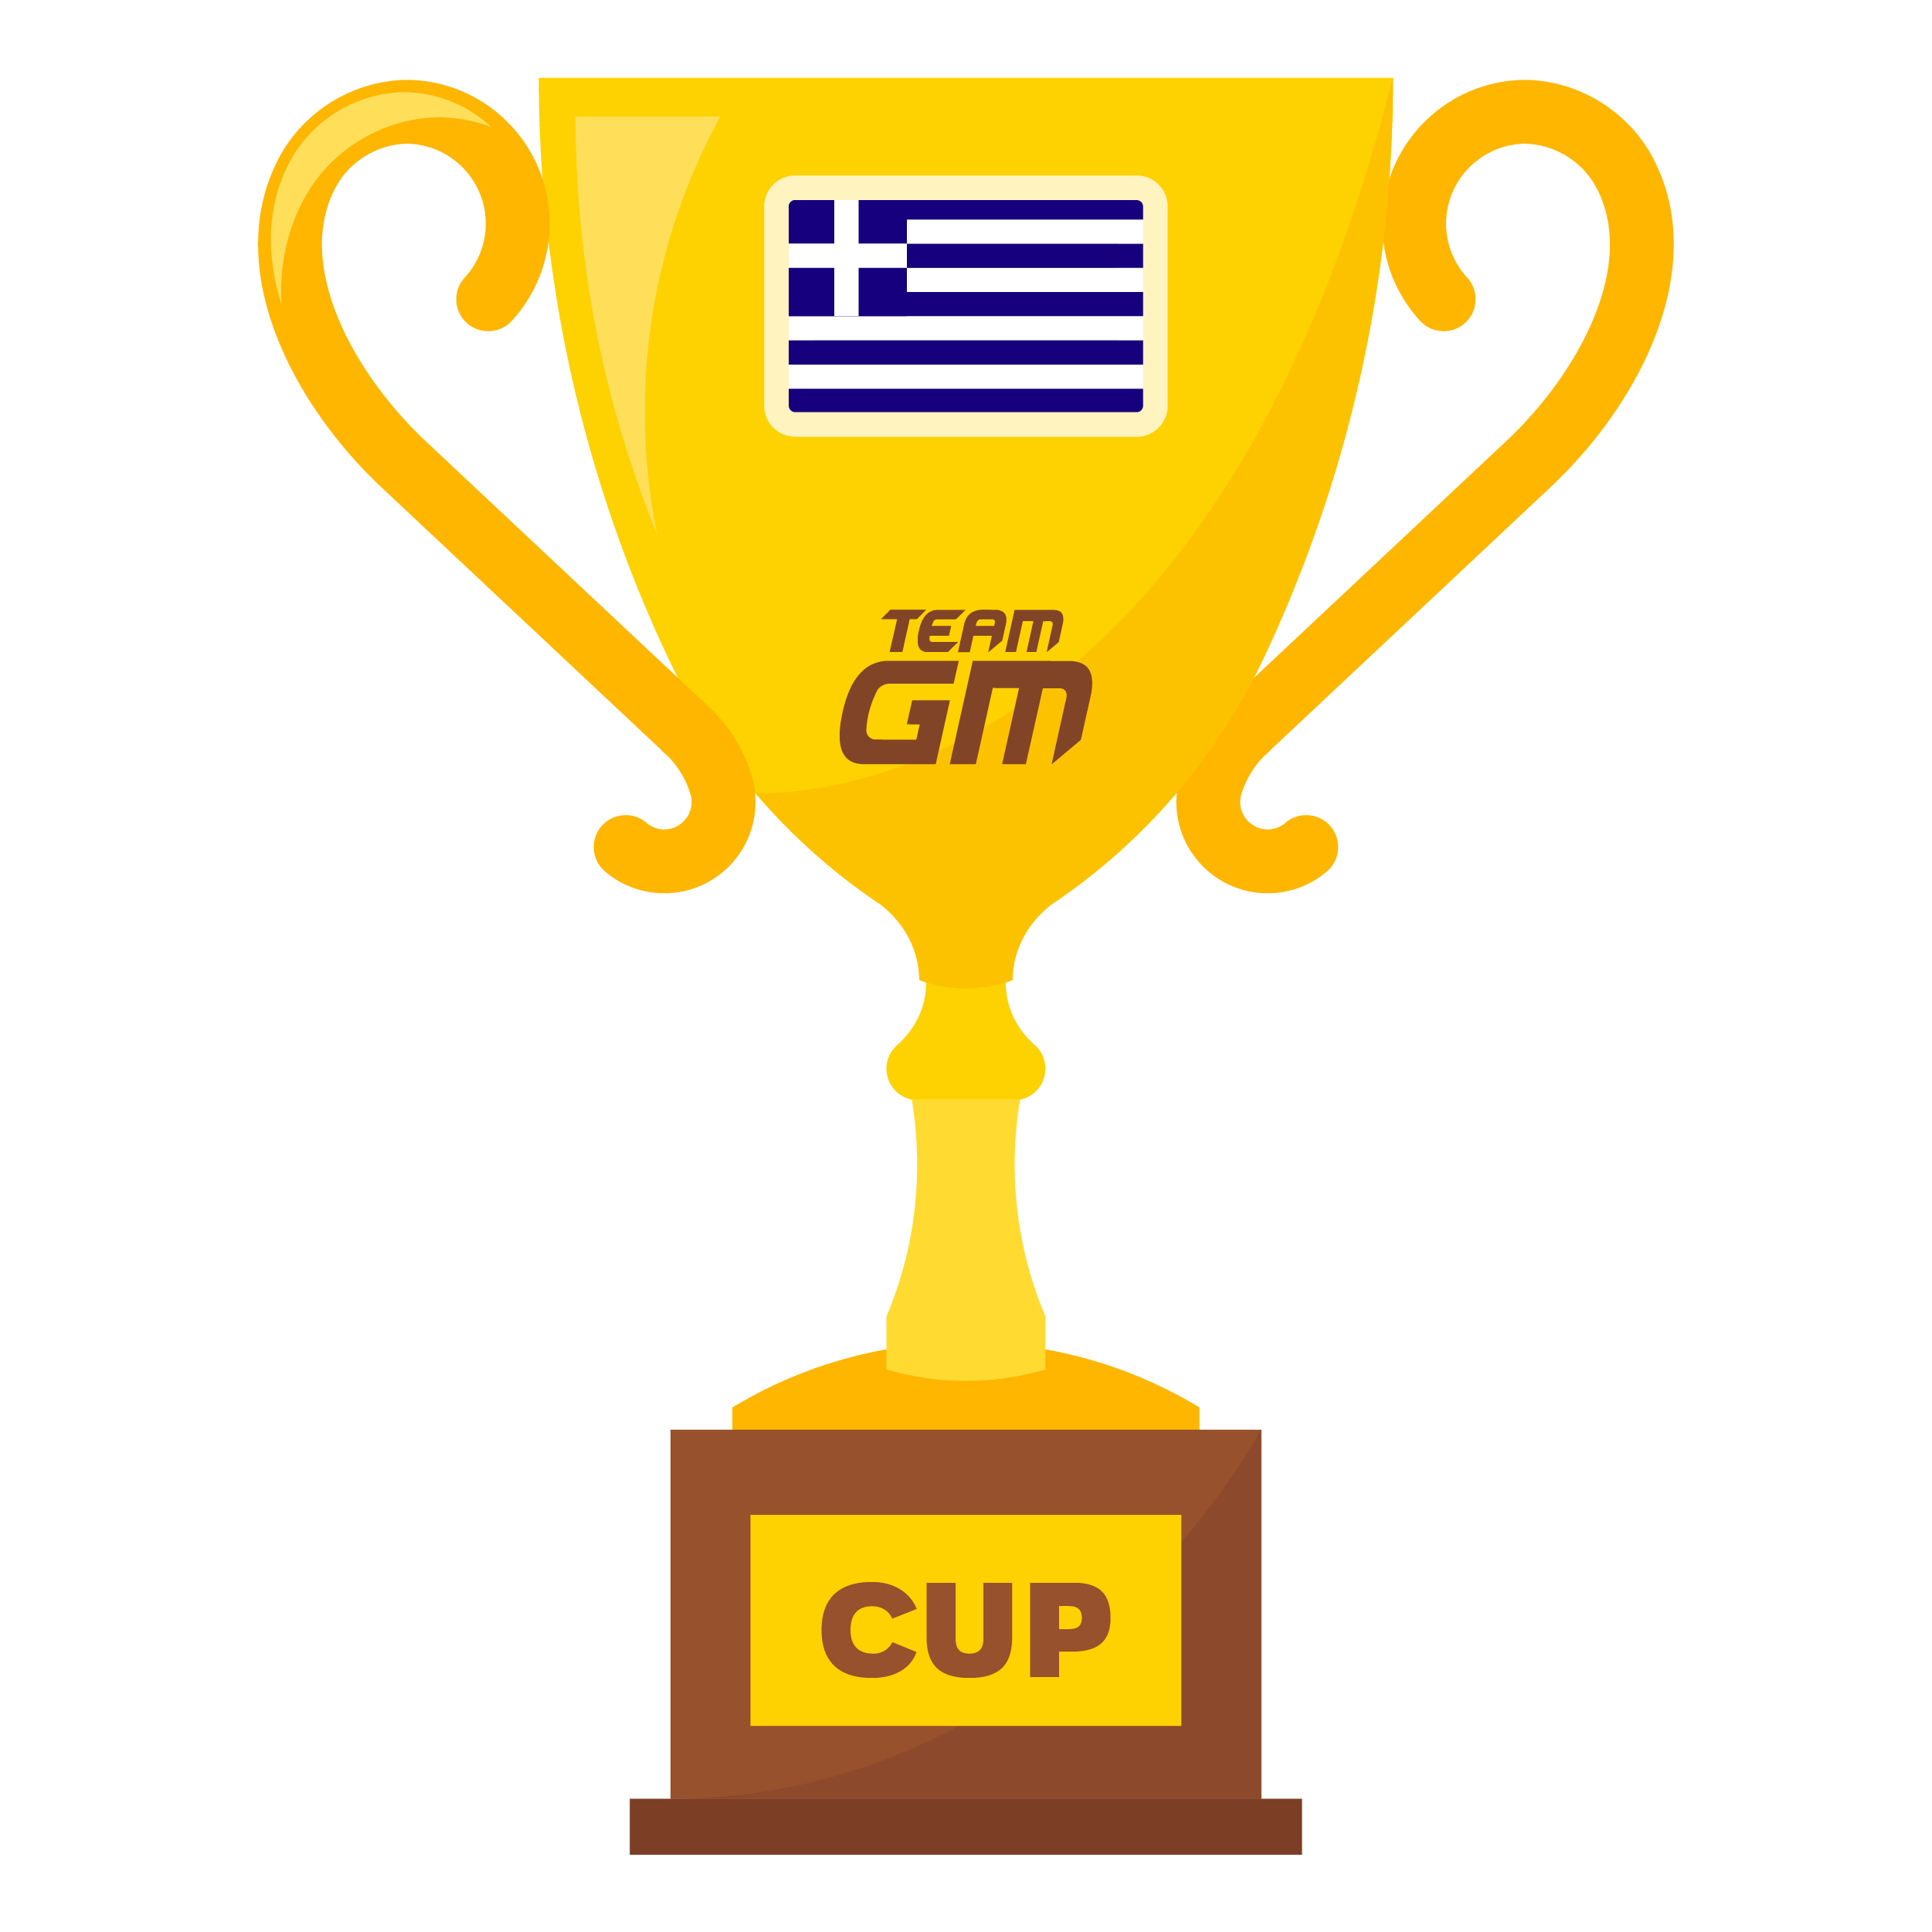 1ST - GREEK CUP